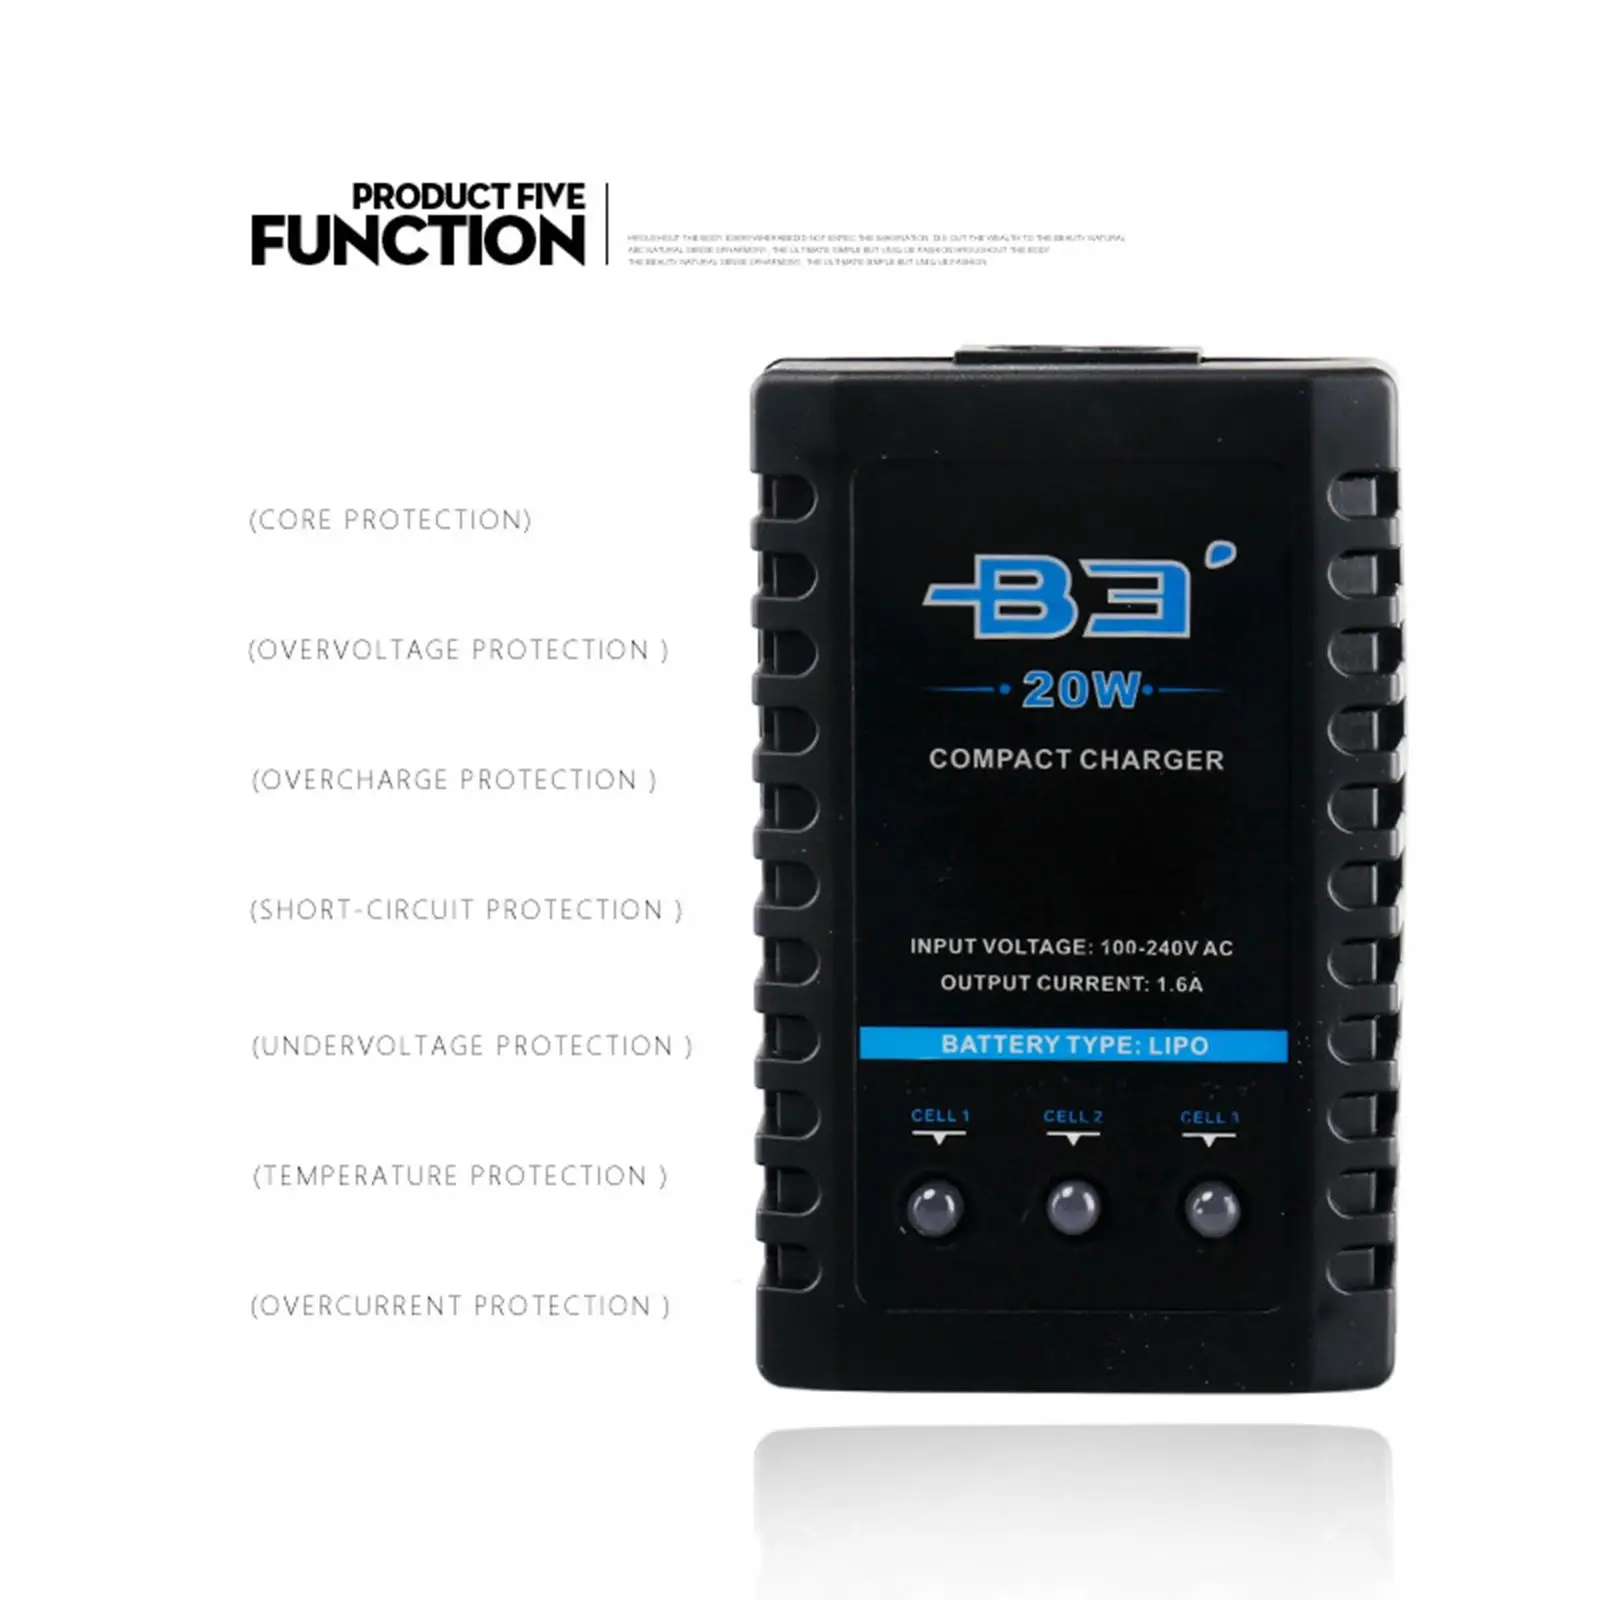 B3 20W Balance Charger for 7.4V 11.1V Lithium Battery Professional Plug-EU